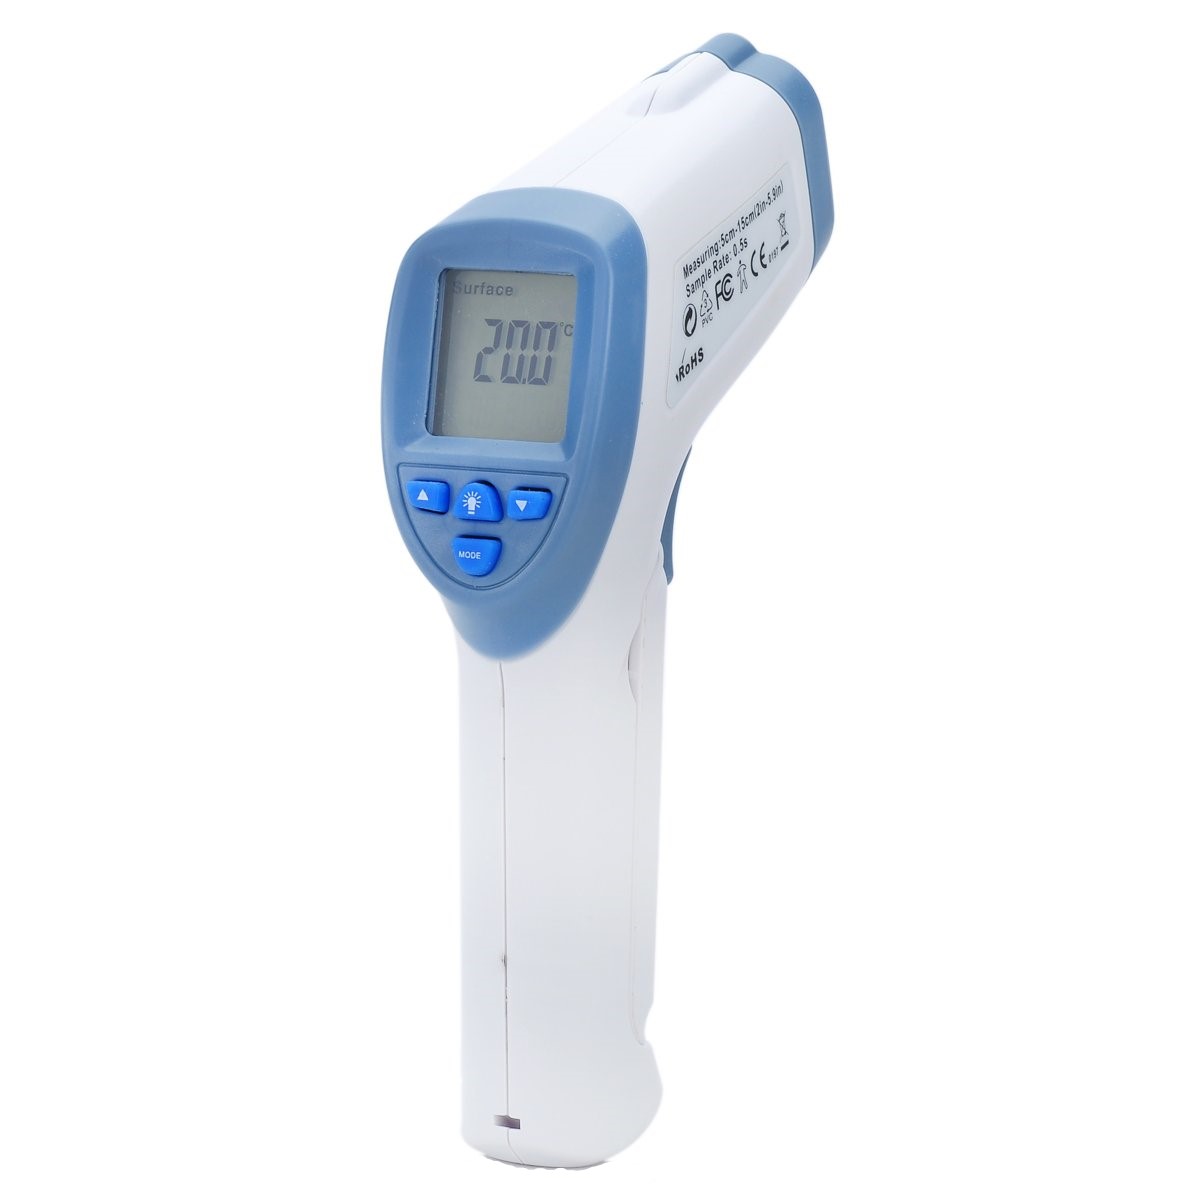 Termometru pentru copii cu infrarosu klausstech, functioneaza fara contact, ideal pentru corp si obicte, temperatura 34 - 43° c design modern, alb&albastru